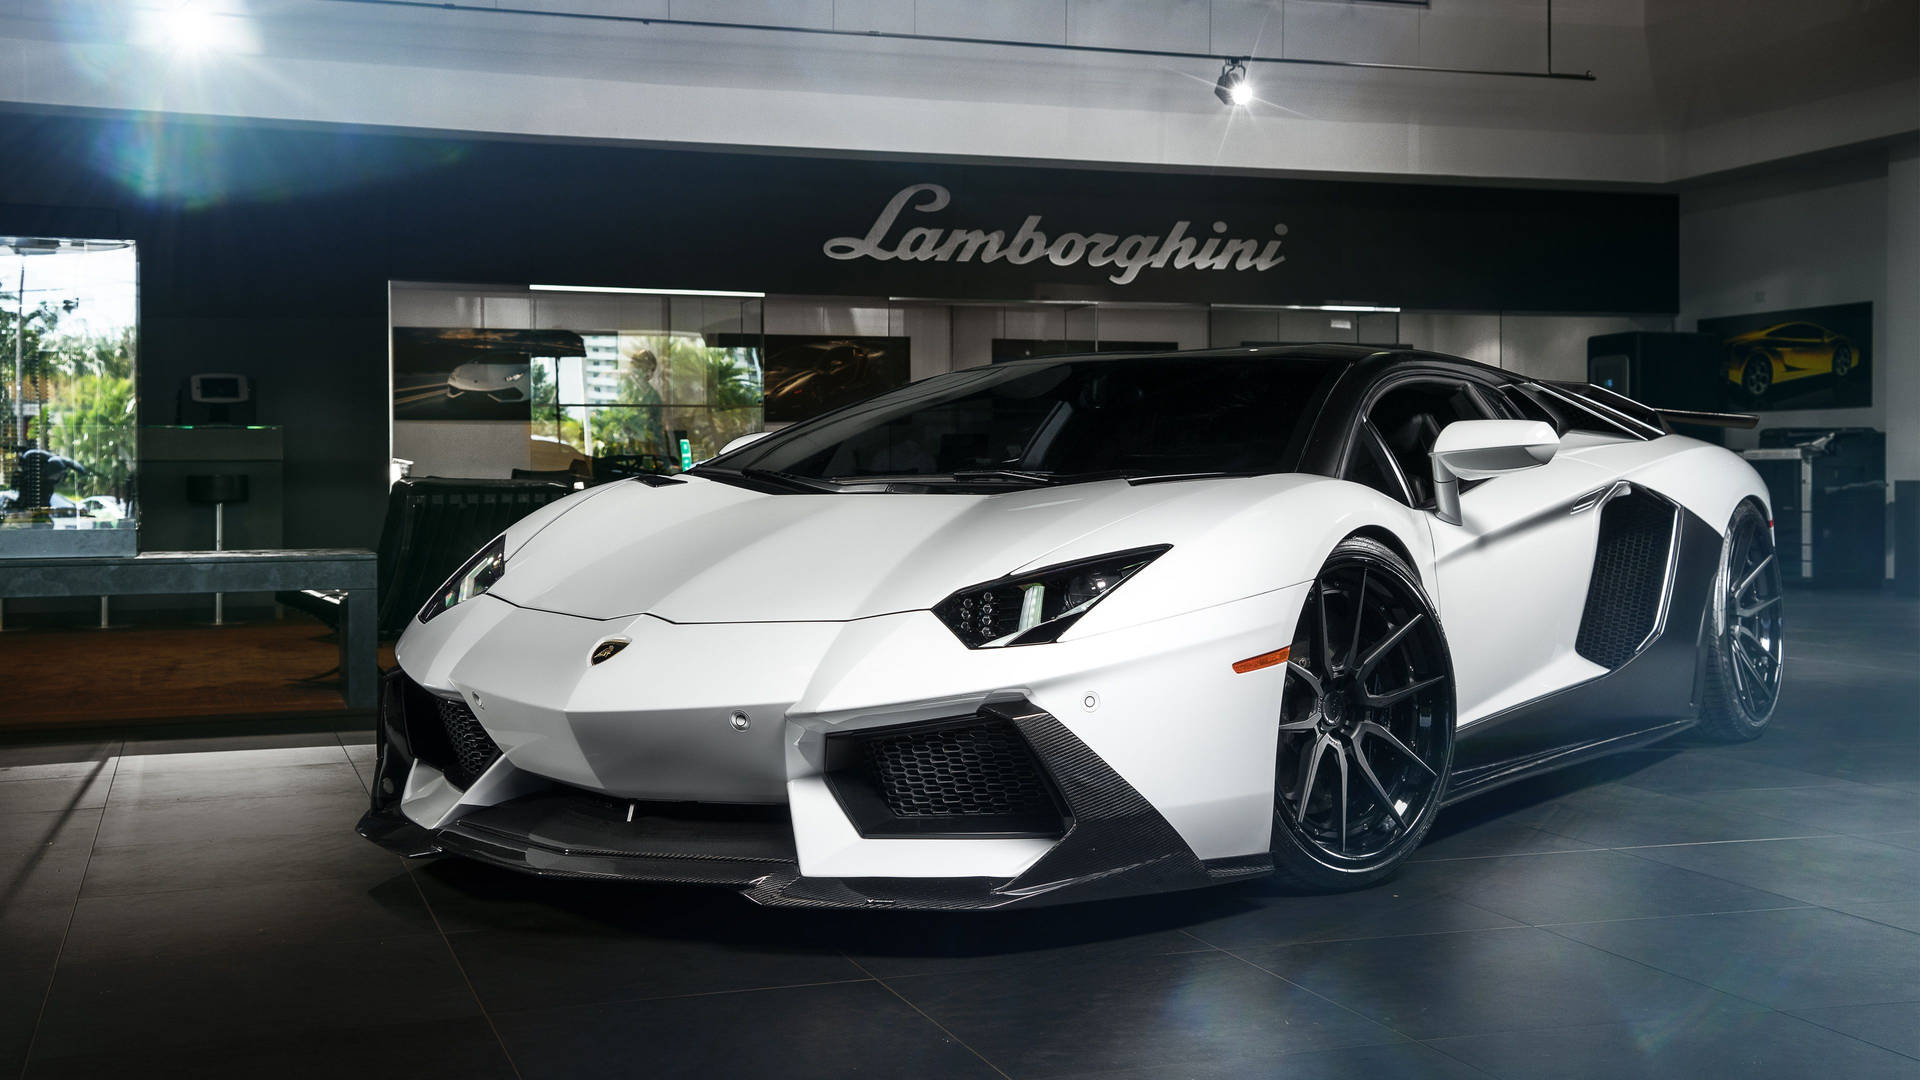 3840X2160 Lamborghini Wallpaper and Background